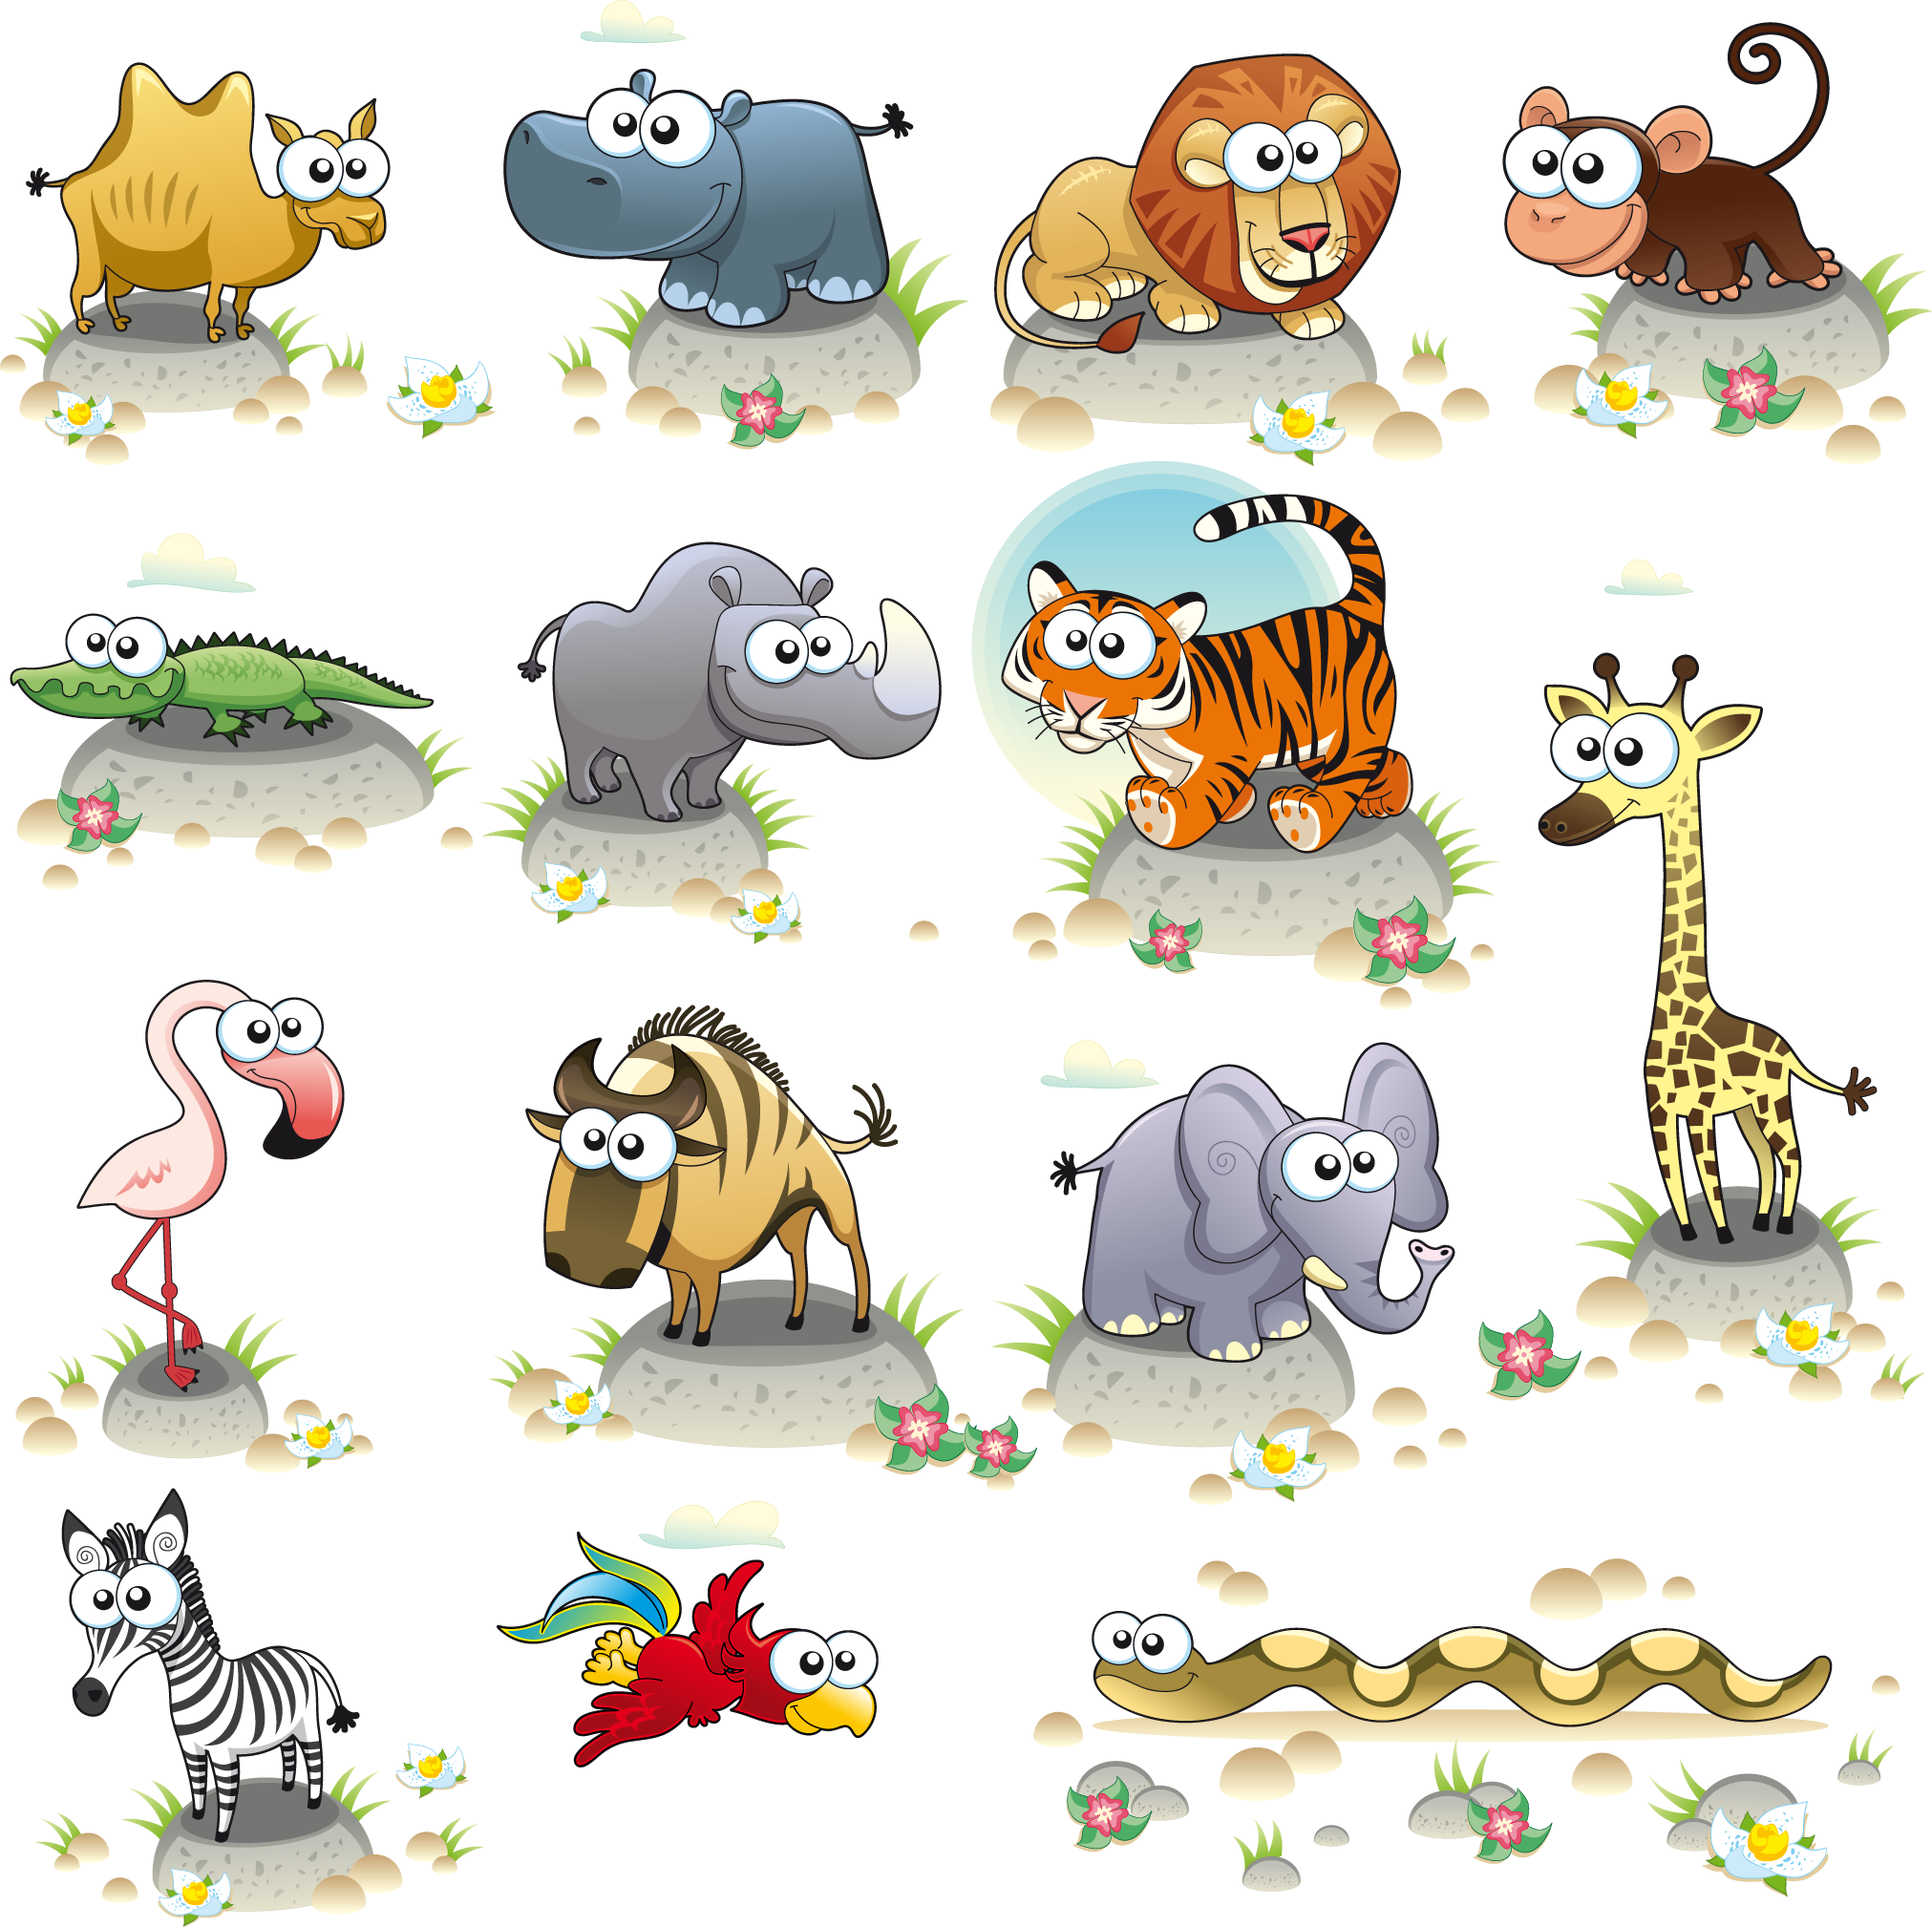 Vector Hand-painted Cartoon Animals 2023*2018 Transprent - Animal Fabric - Savannah Animals - Tiger Custom Fabric (2023x2018)